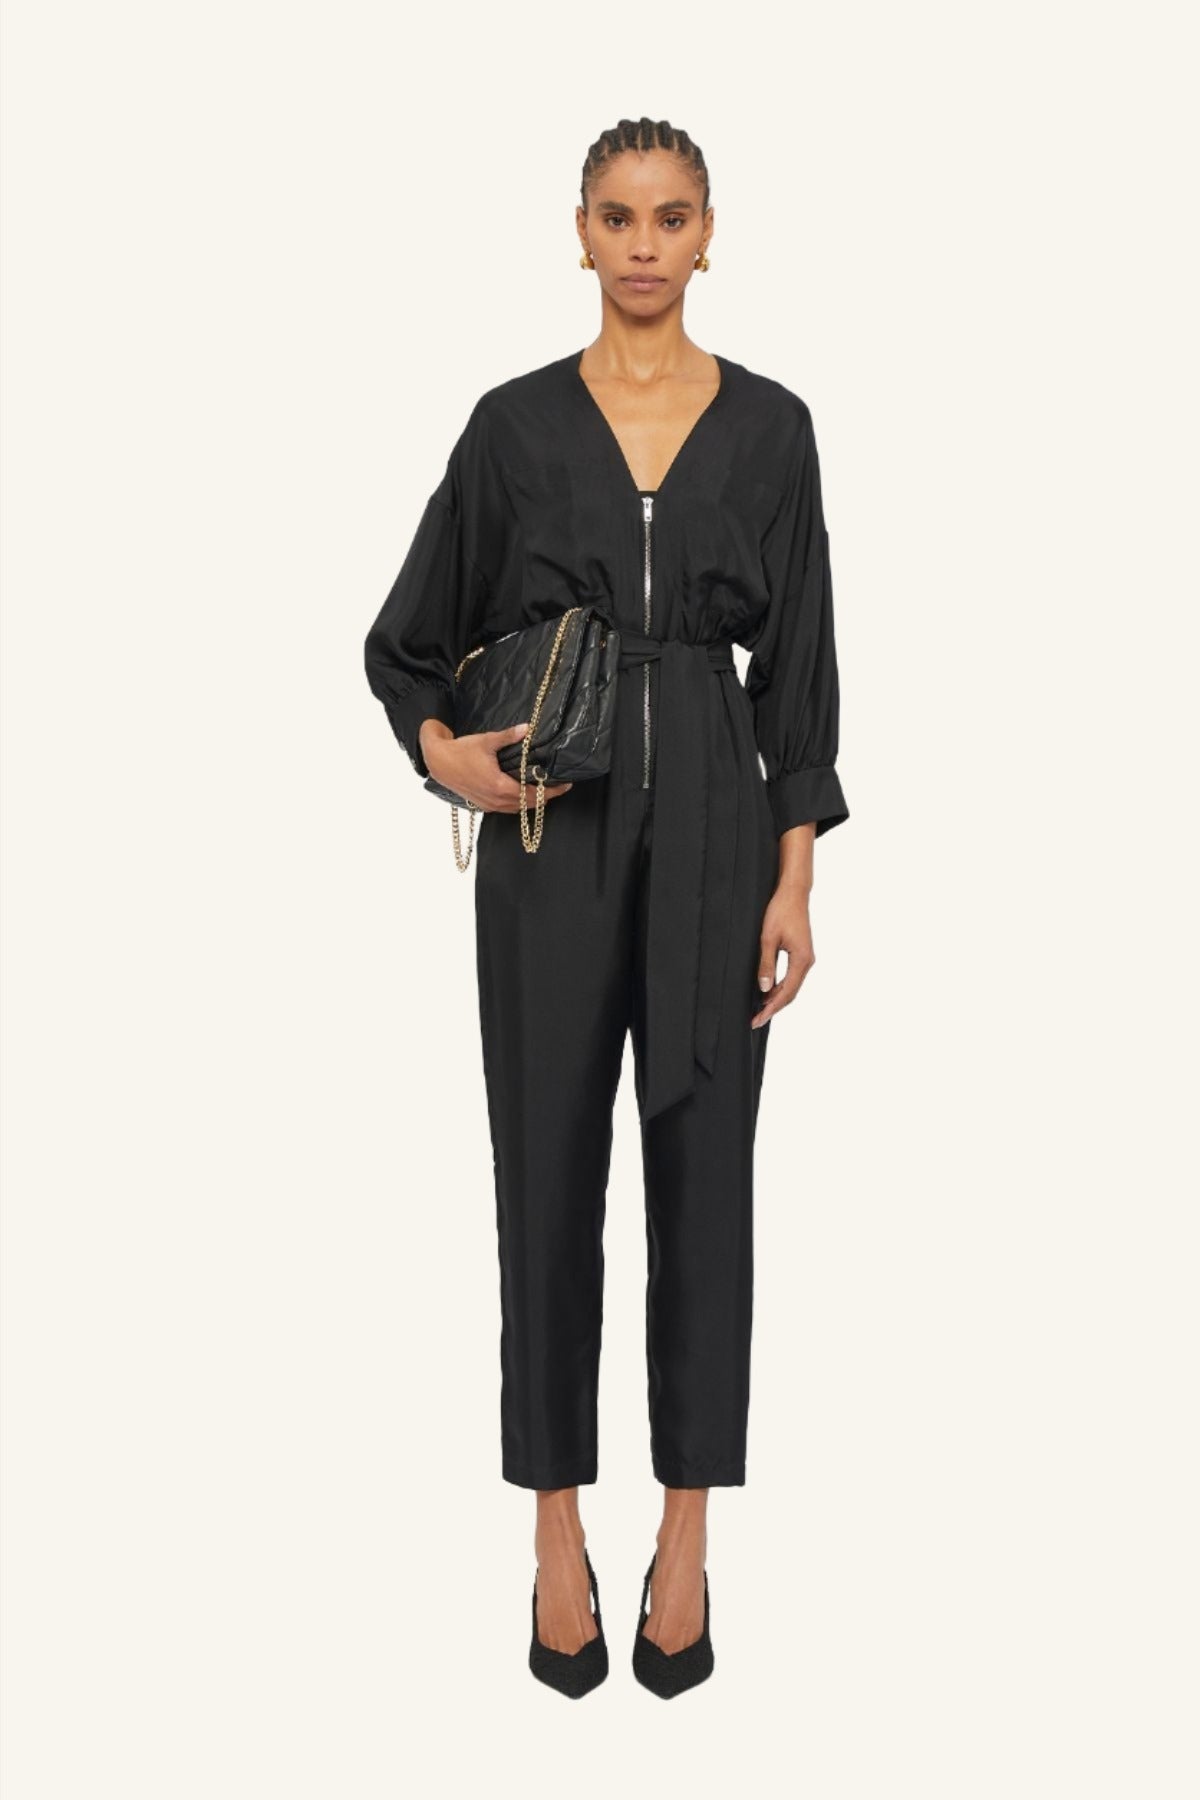 Black Silk Exposured Zipper Front Edition Jumpsuit by Australian Designer GINGER & SMART